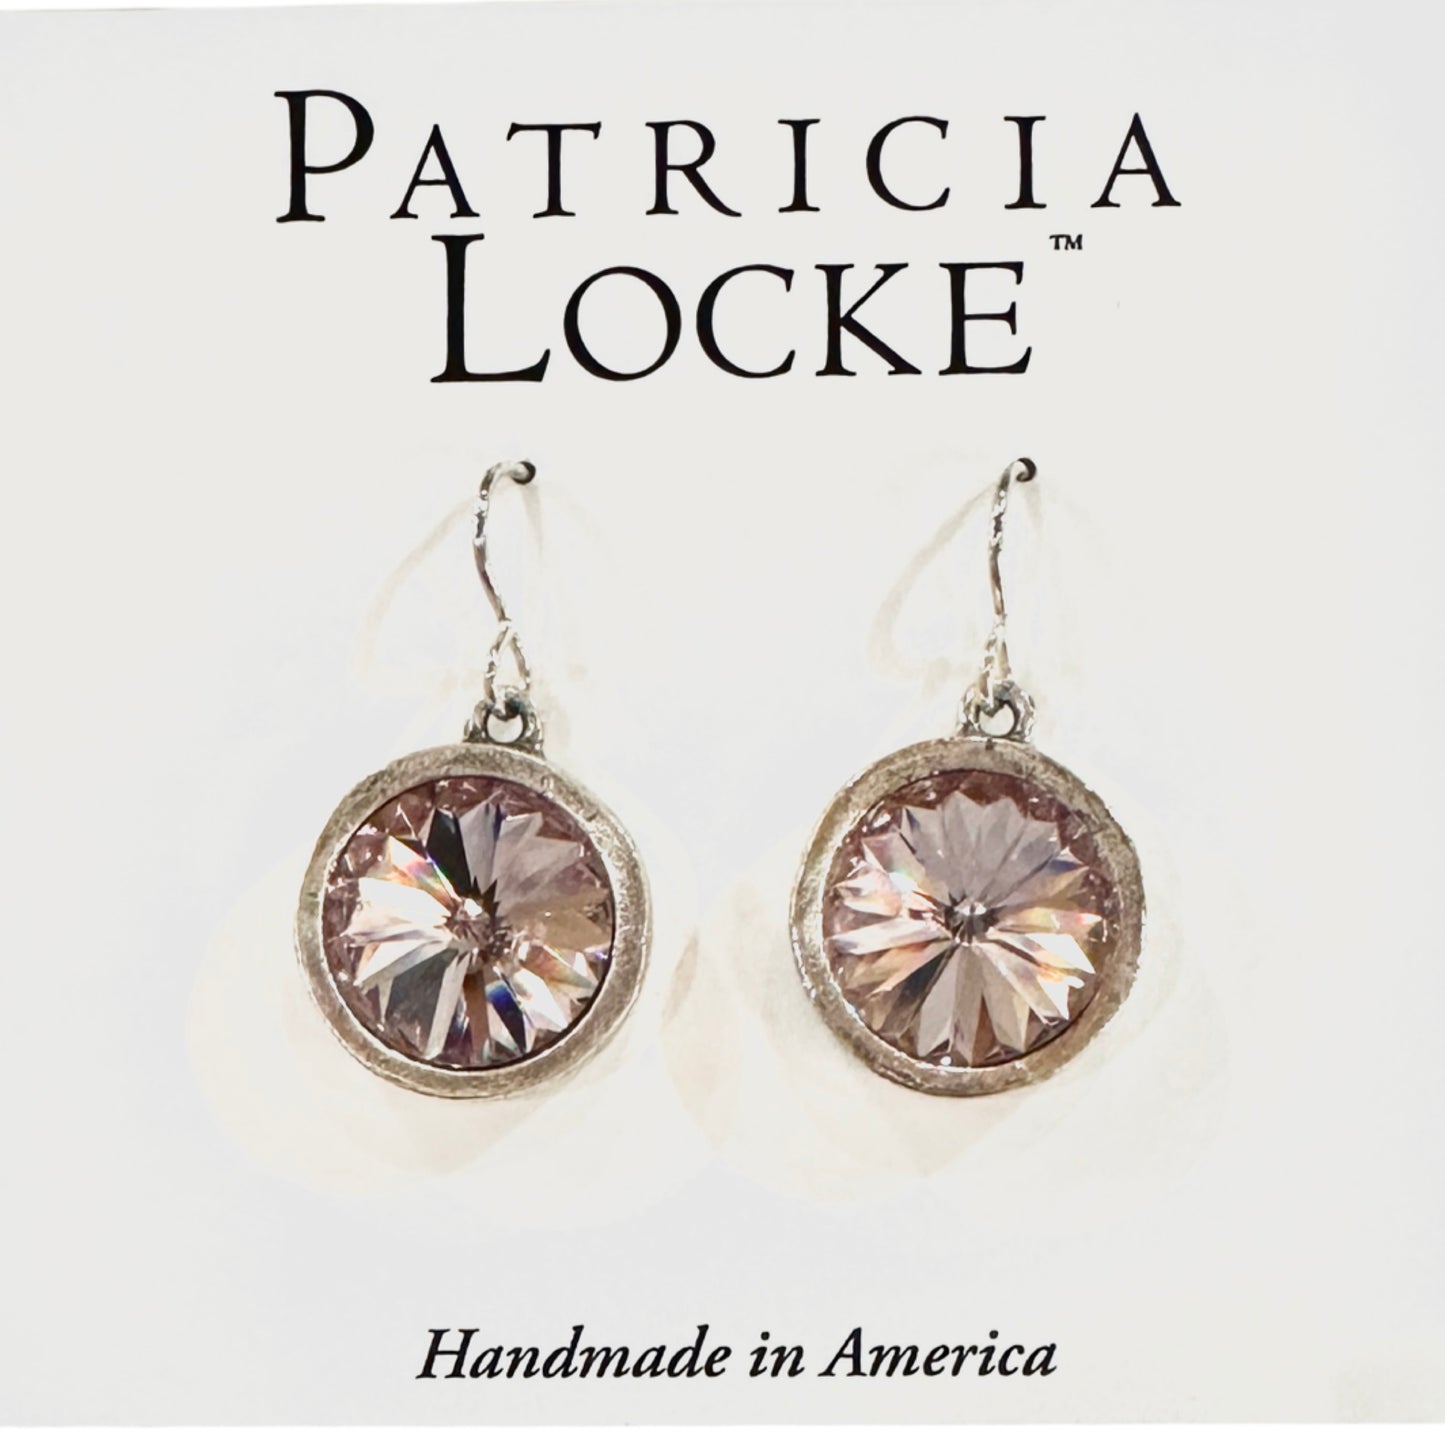 Patricia Locke Sirius Earrings